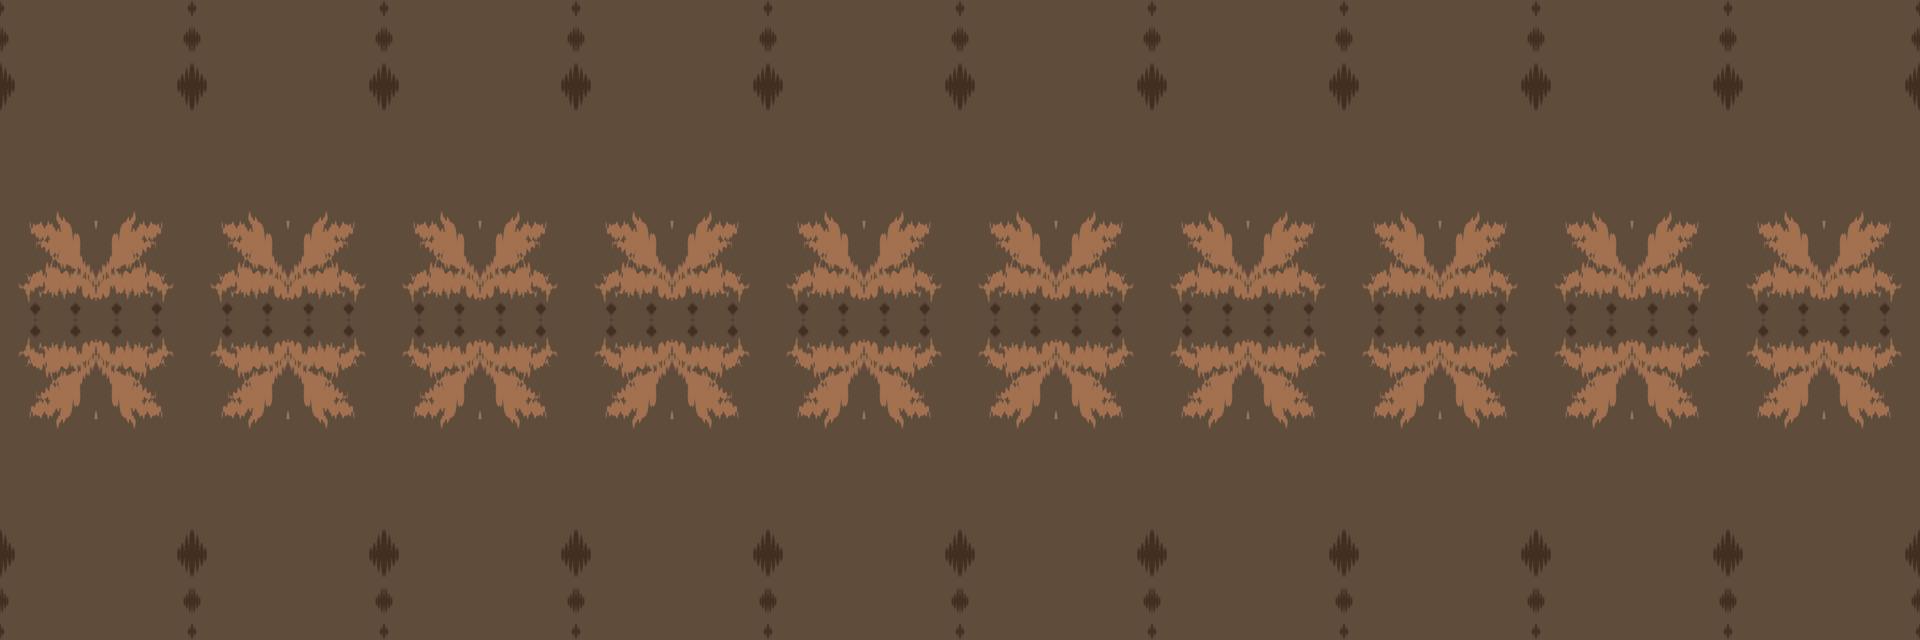 ikat disegni tribale sfondi senza soluzione di continuità modello. etnico geometrico batik ikkat digitale vettore tessile design per stampe tessuto saree Mughal spazzola simbolo andane struttura Kurti kurtis kurtas